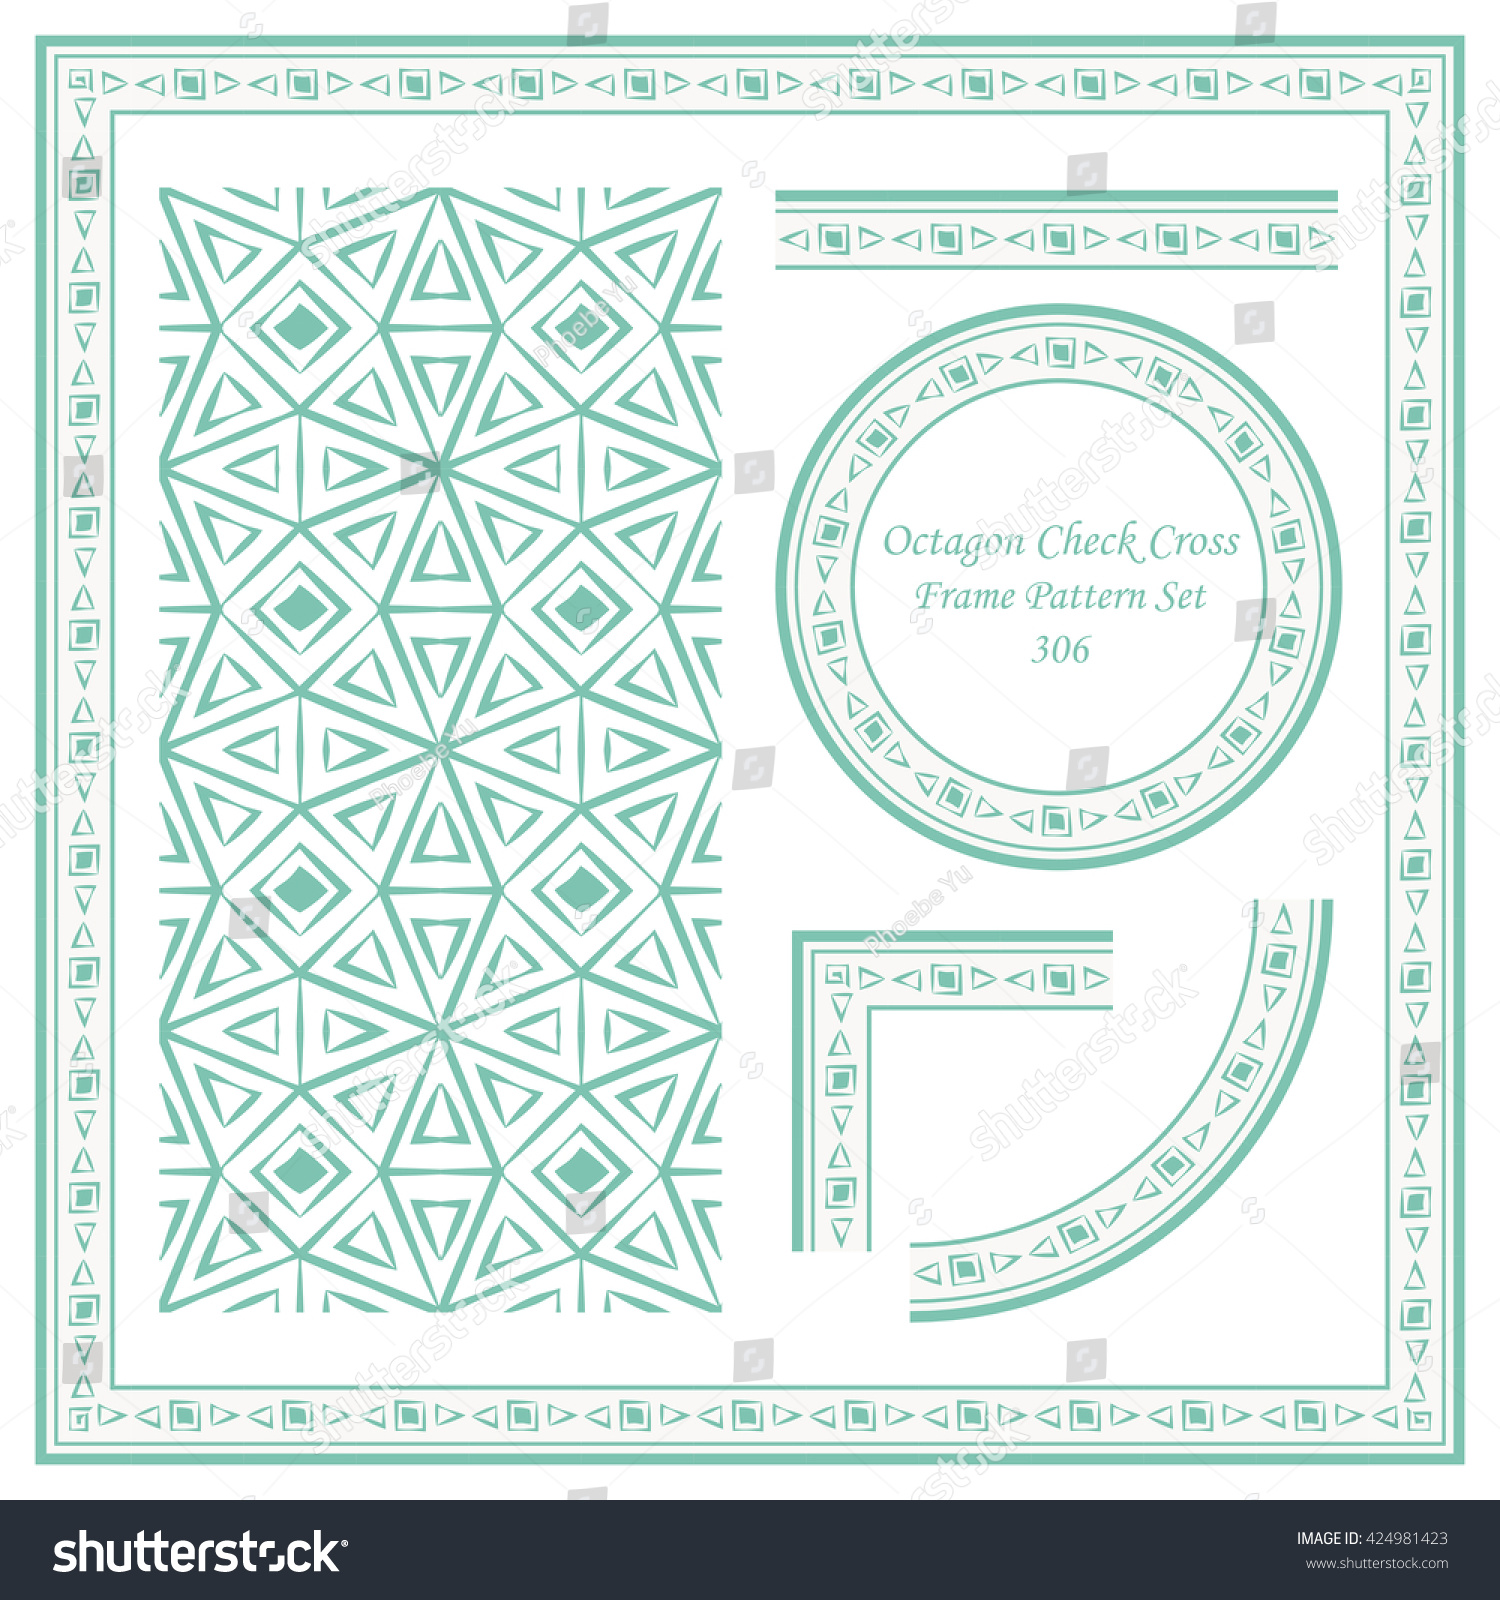 SVG of Vintage Frame Pattern Set 306 Octagon Check Cross Triangle Geometry svg